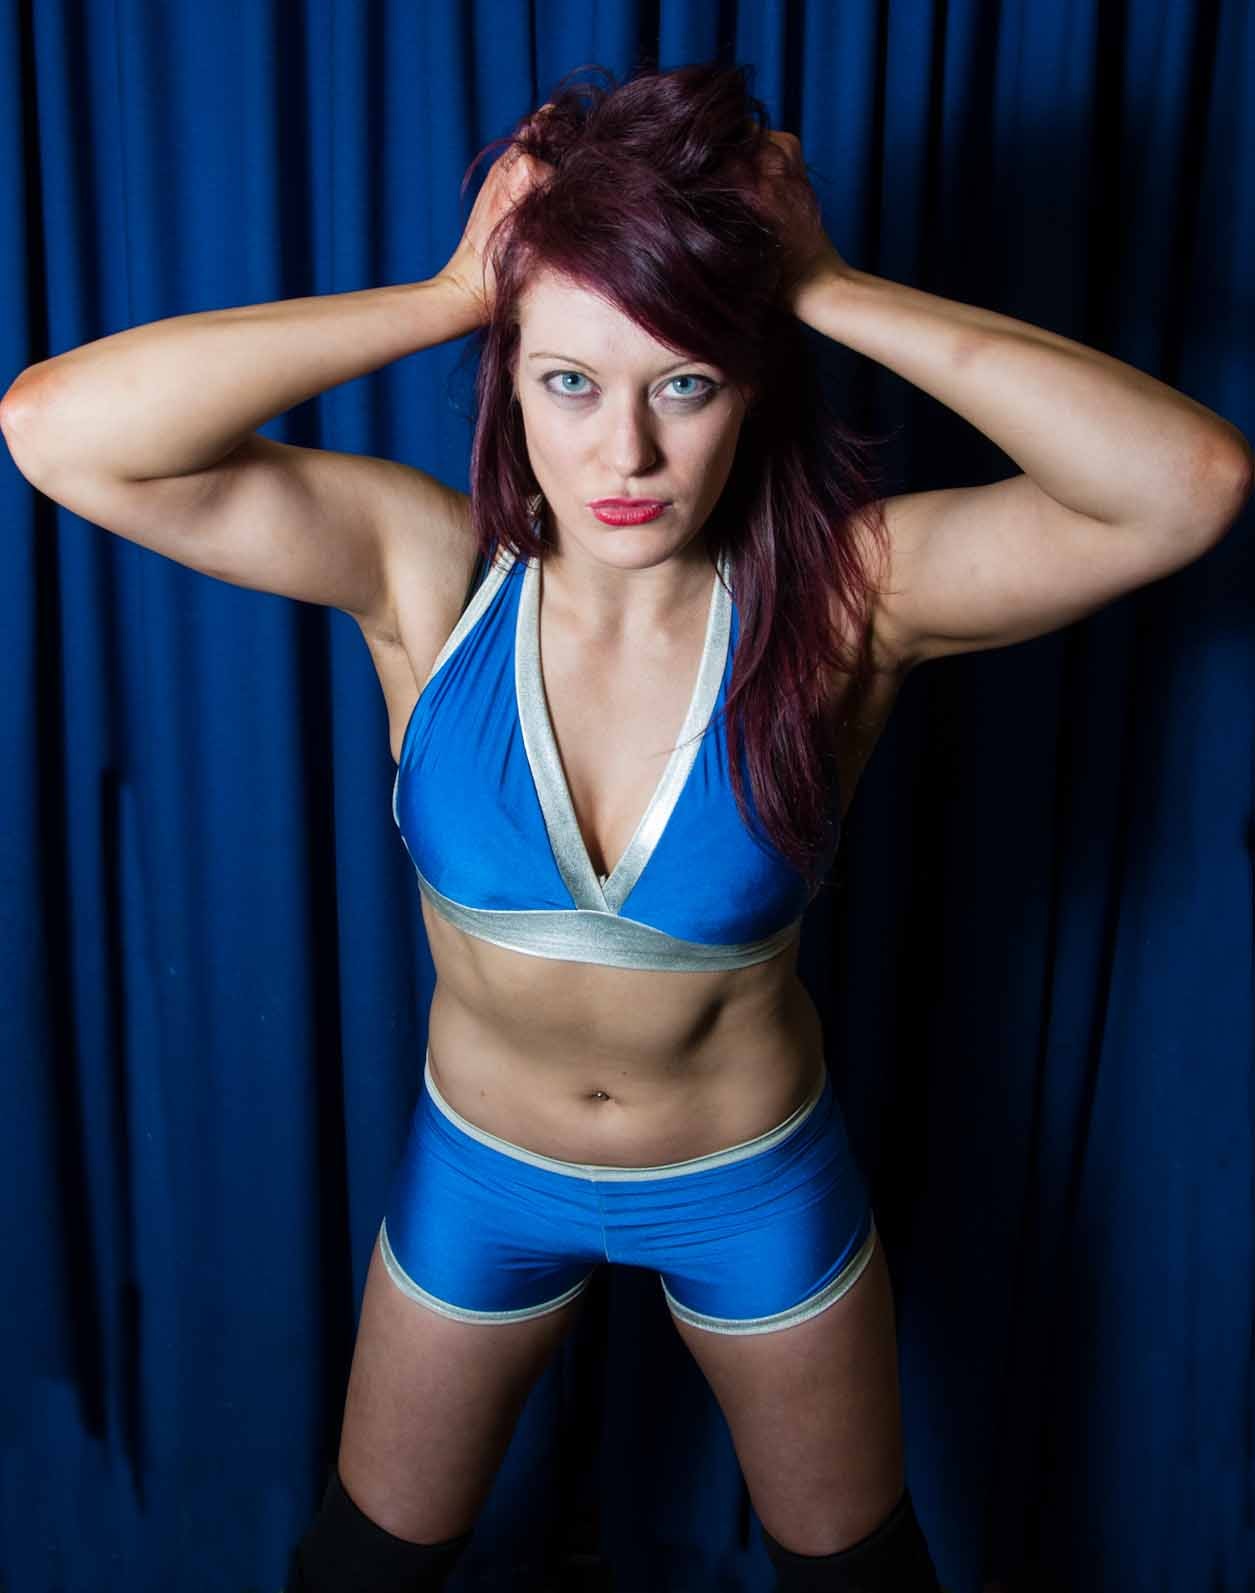 Sara Marie Taylor - Wrestler profile image